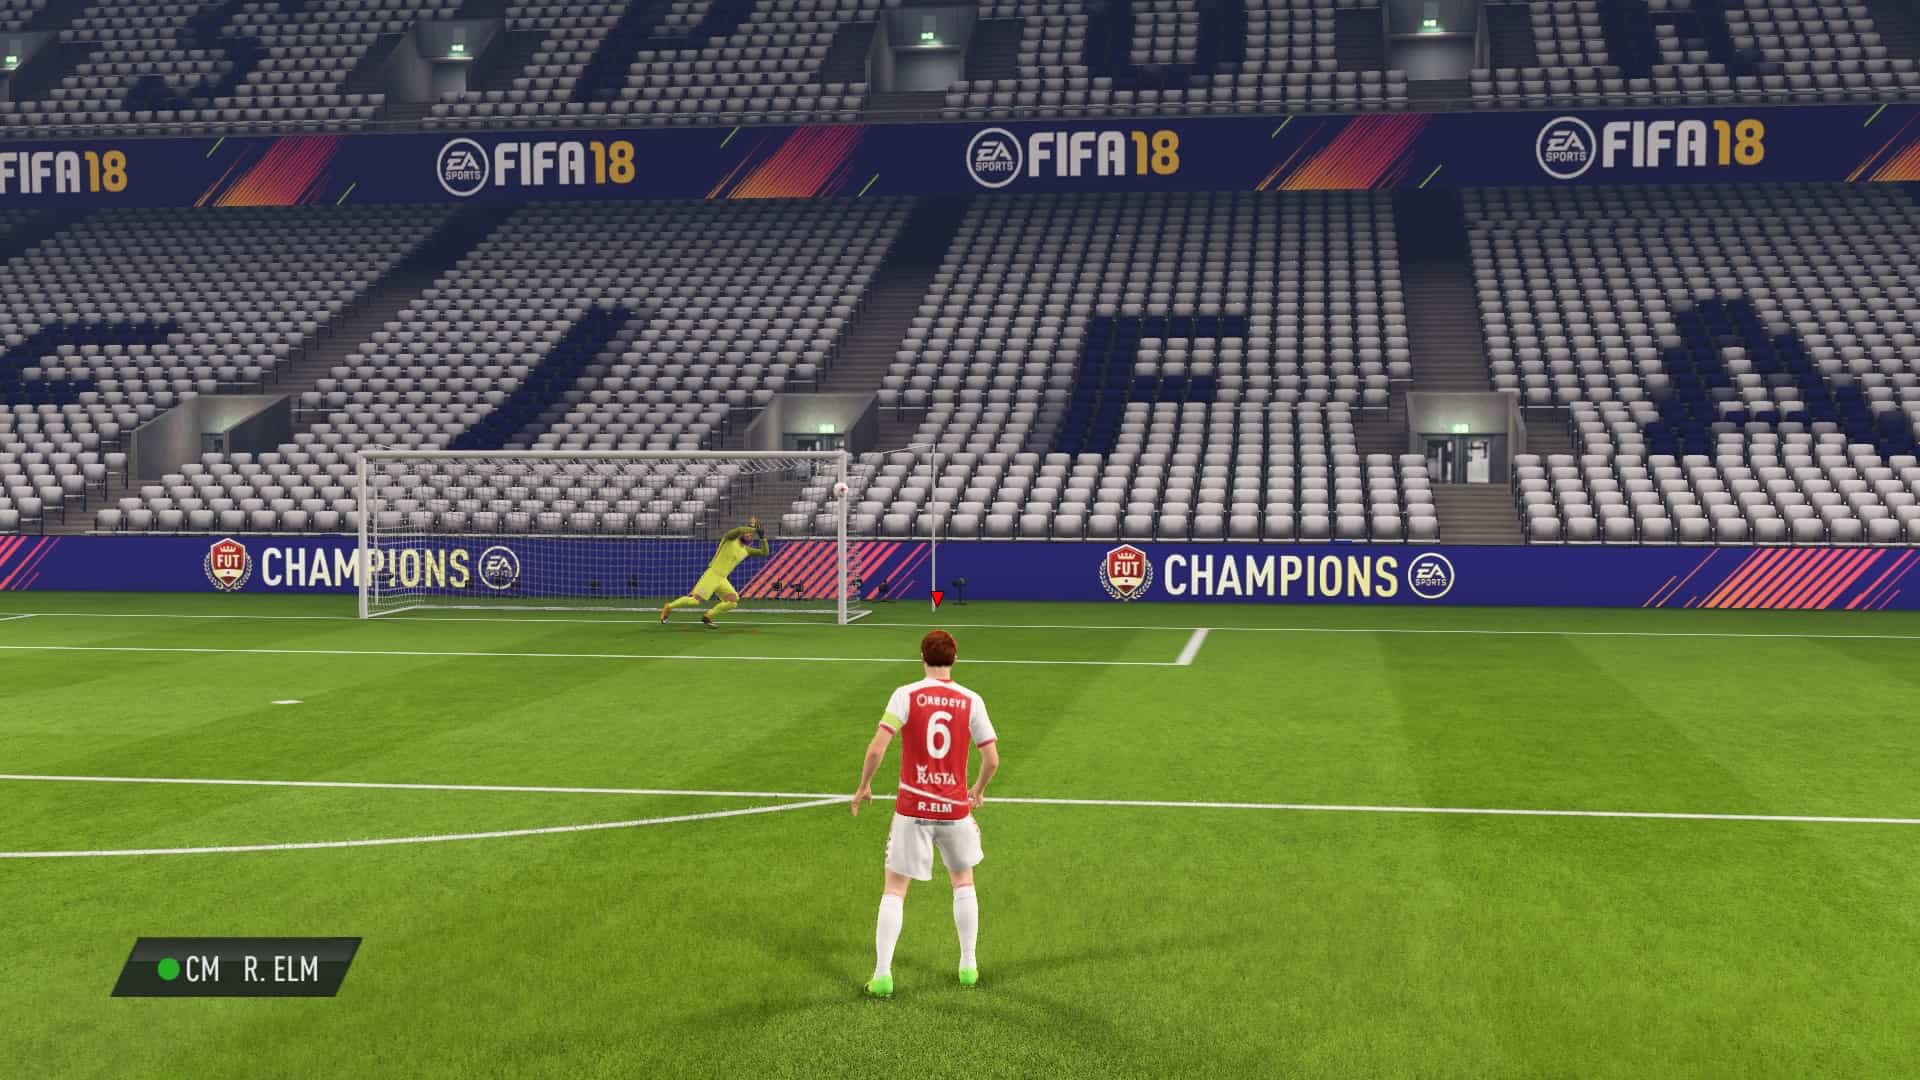 Rasmus Elm taking a Free Kick in FIFA 18